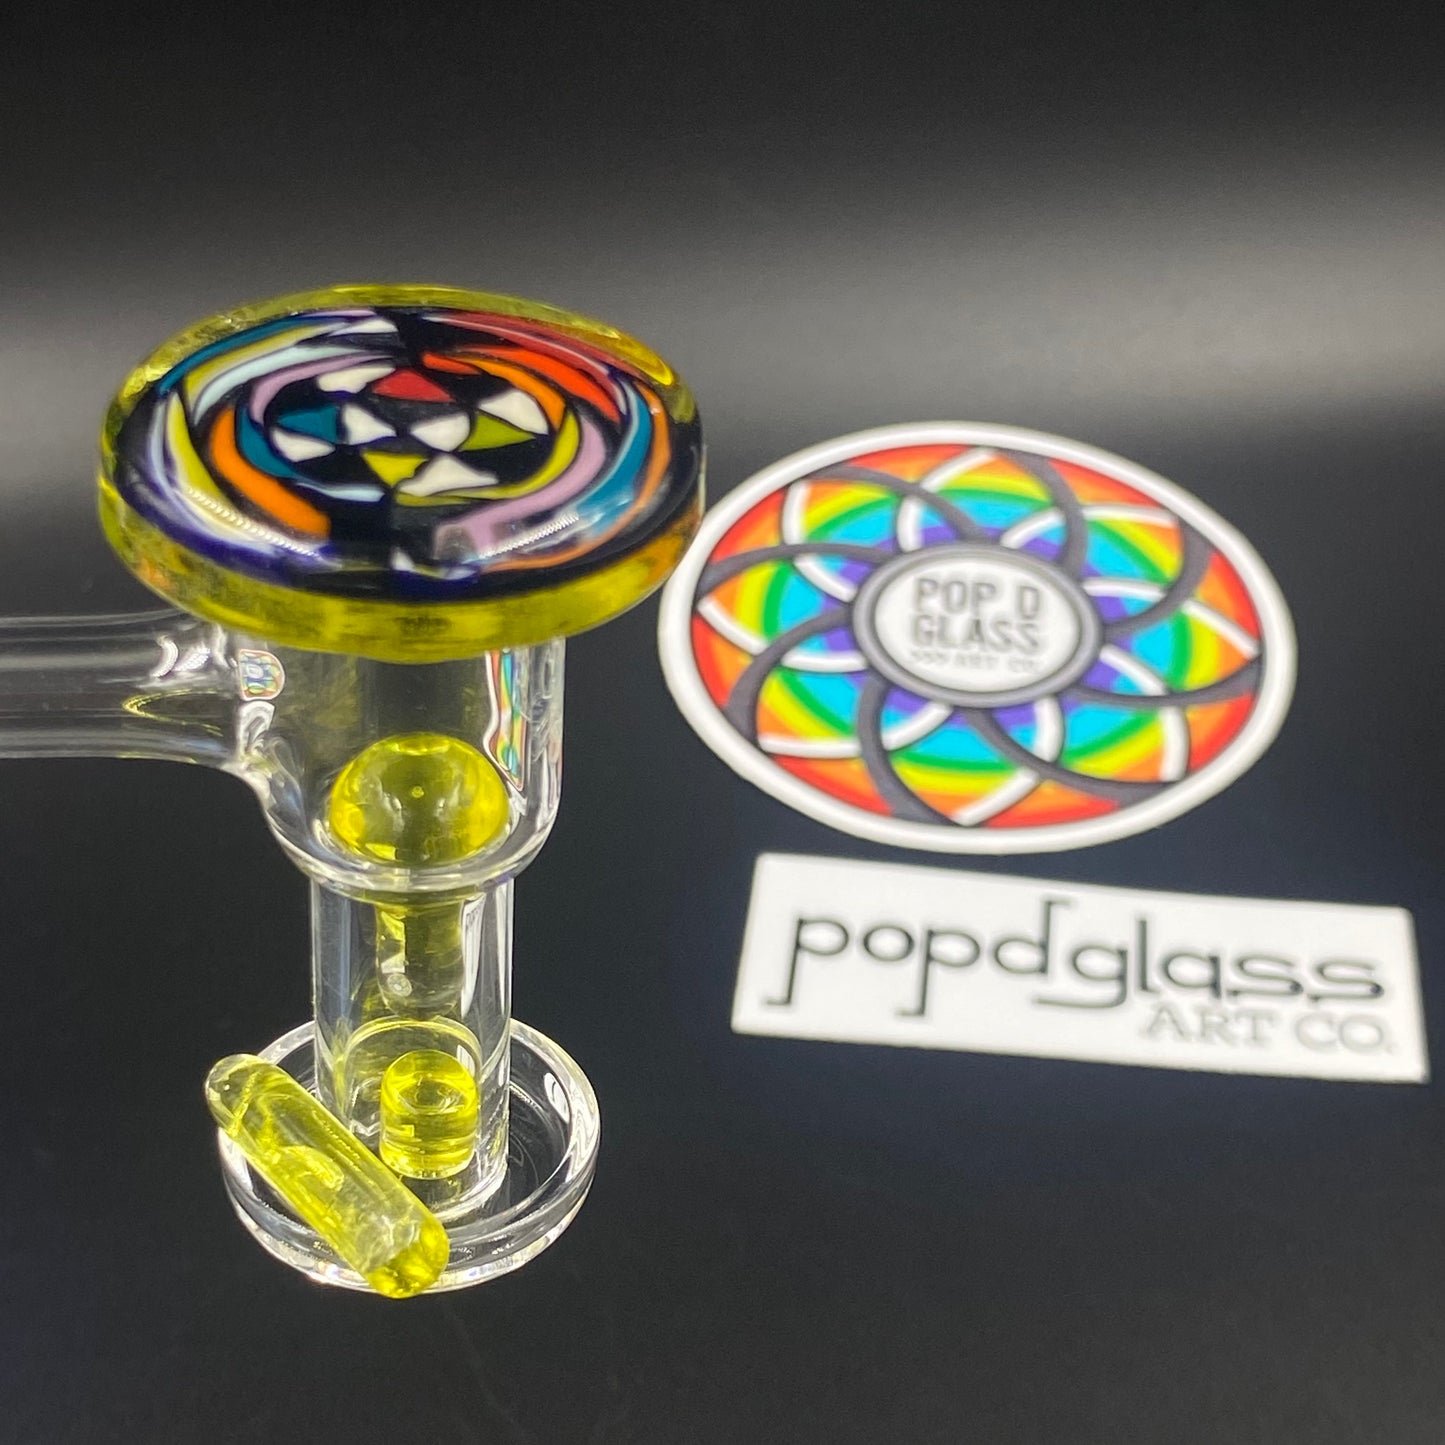 PopDGlassArt - Flippy Terp Slurper Set - Citron